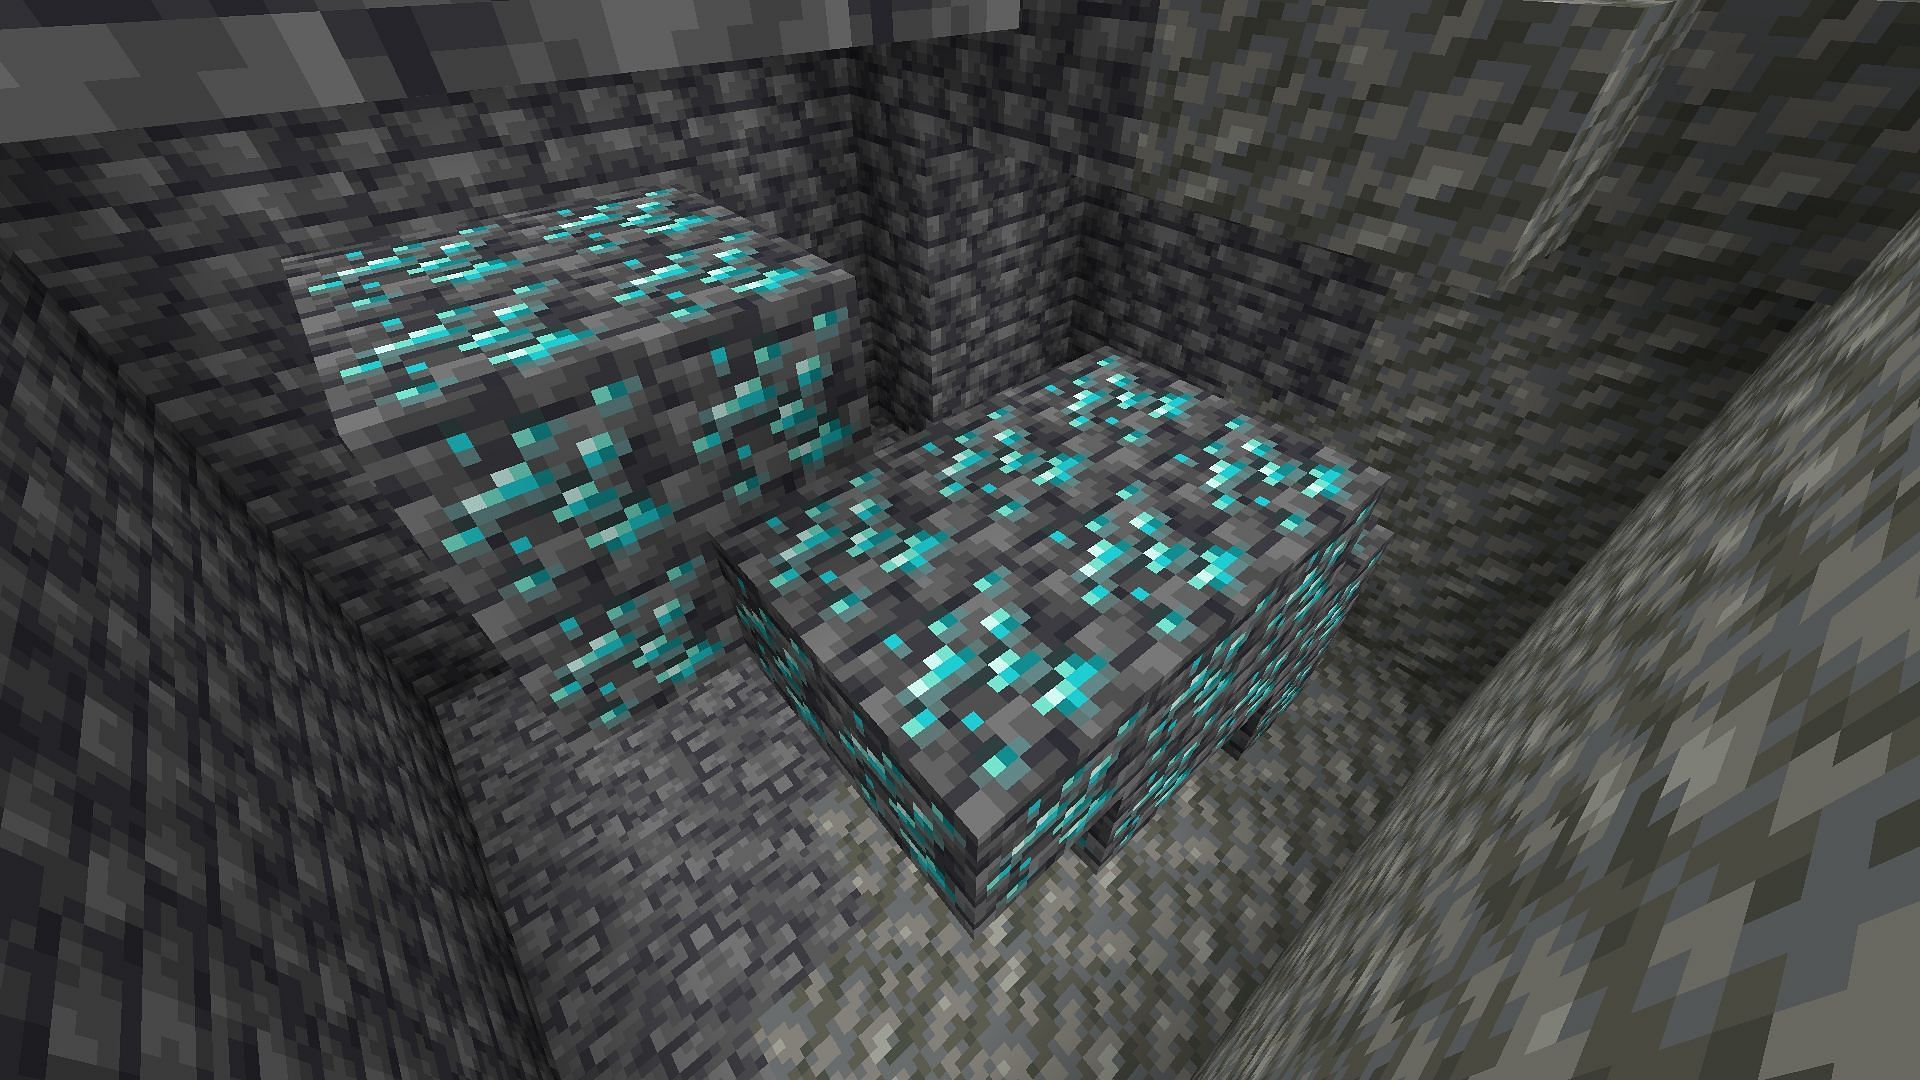 18 diamonds total await Minecraft fans in this seed (Image via TheDiamondMc88/Reddit)